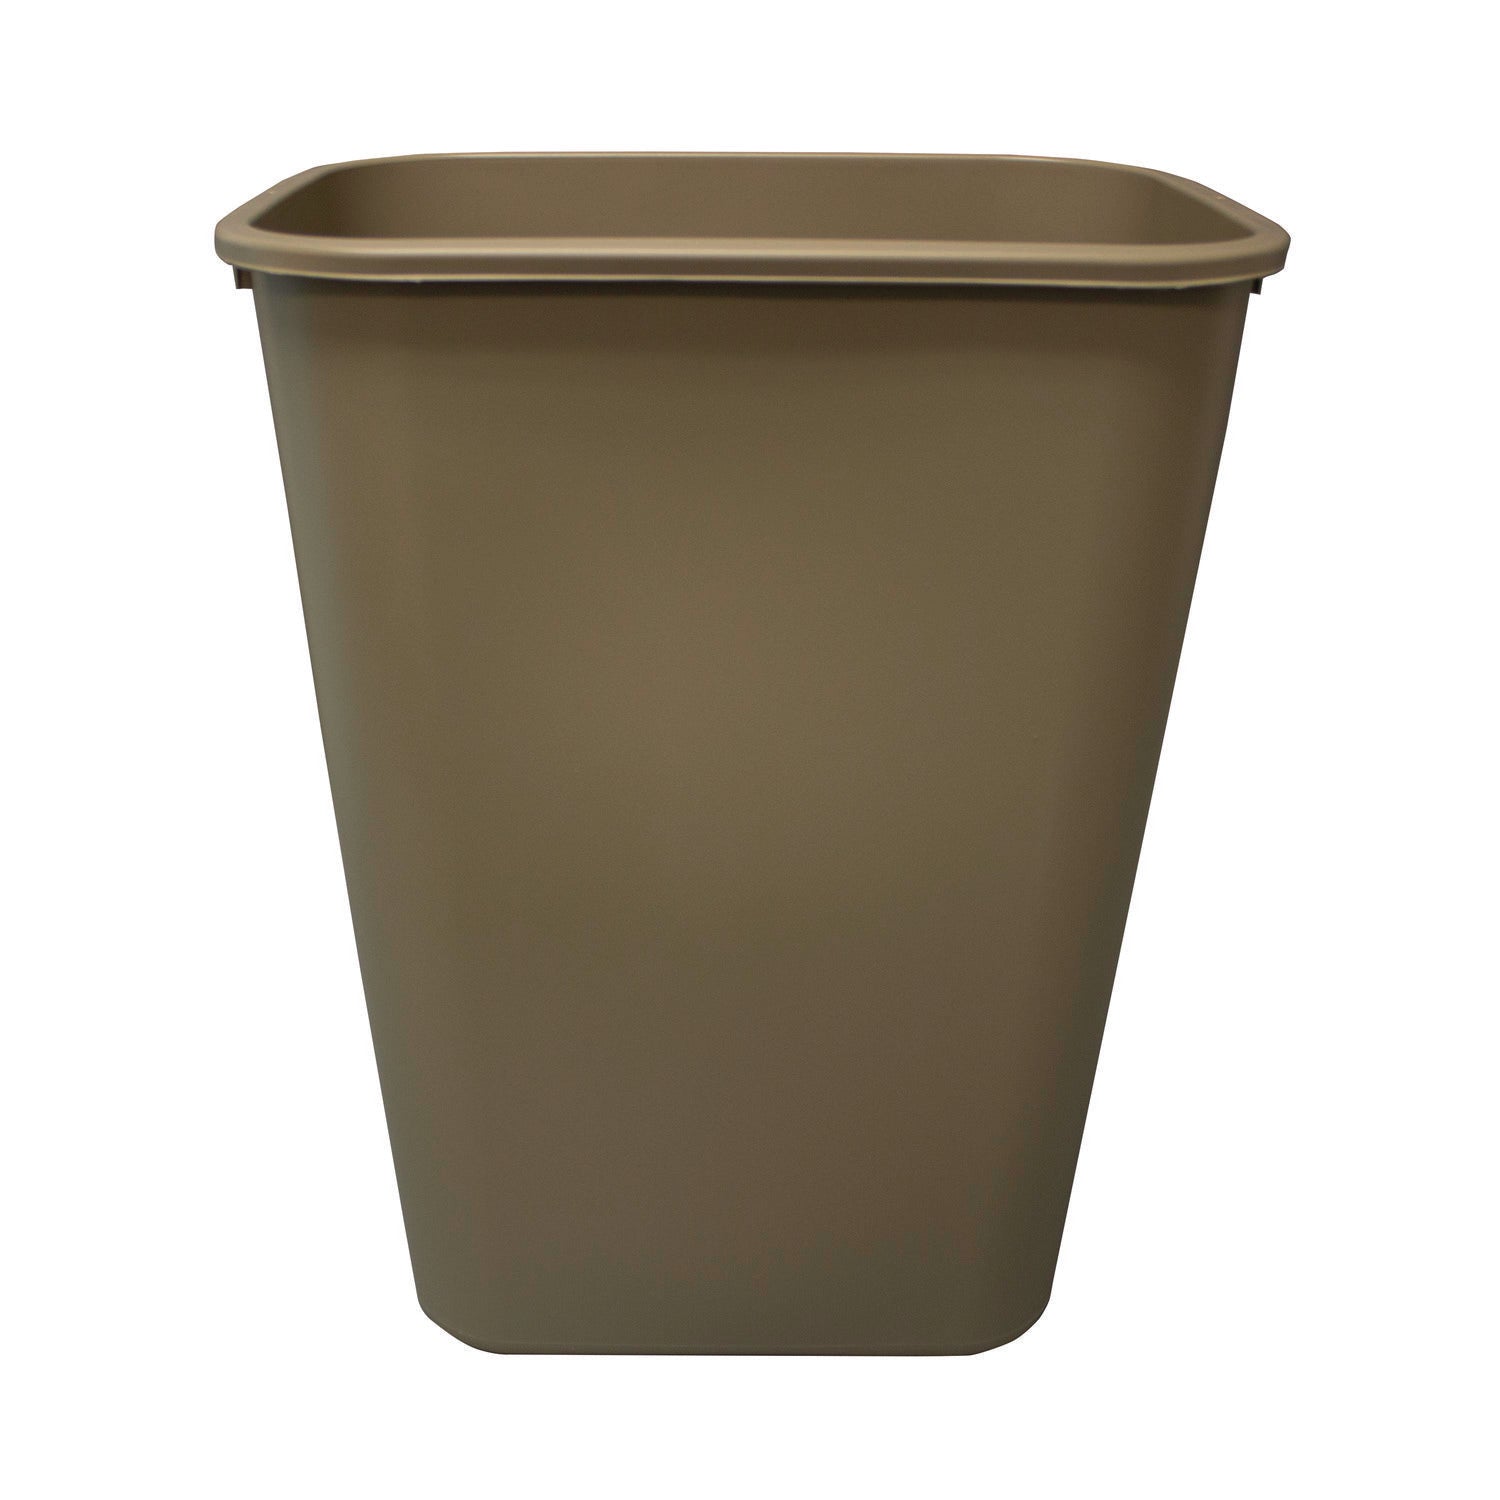 Soft-Sided Wastebasket, 41 qt, Polyethylene, Beige - 2